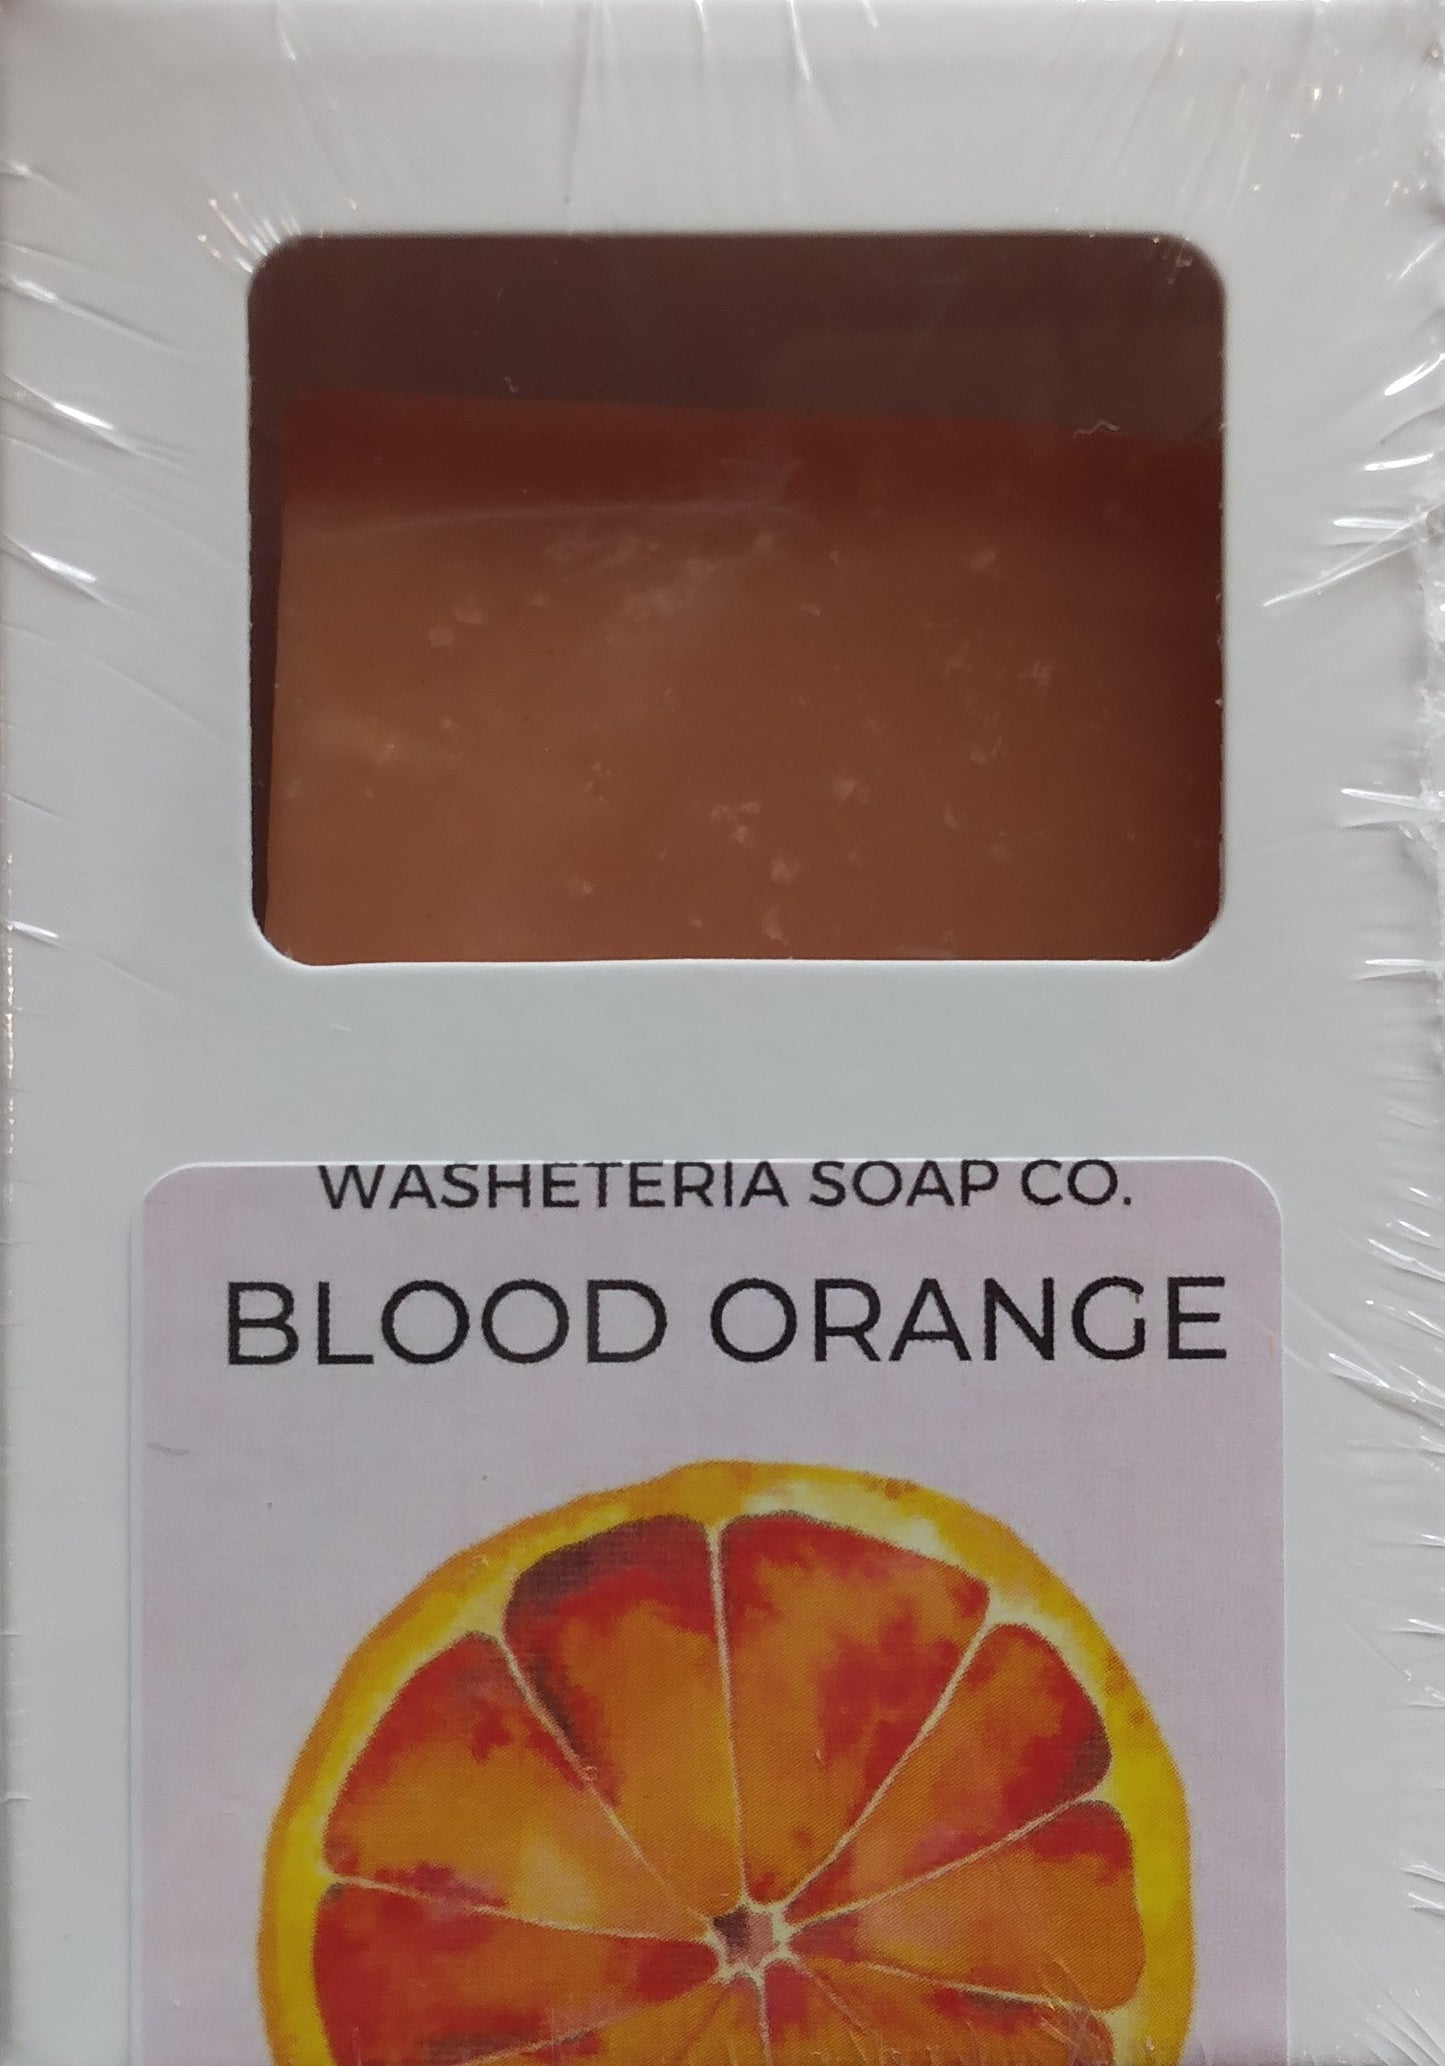 Washeteria Soap Co. - Blood Orange Soap